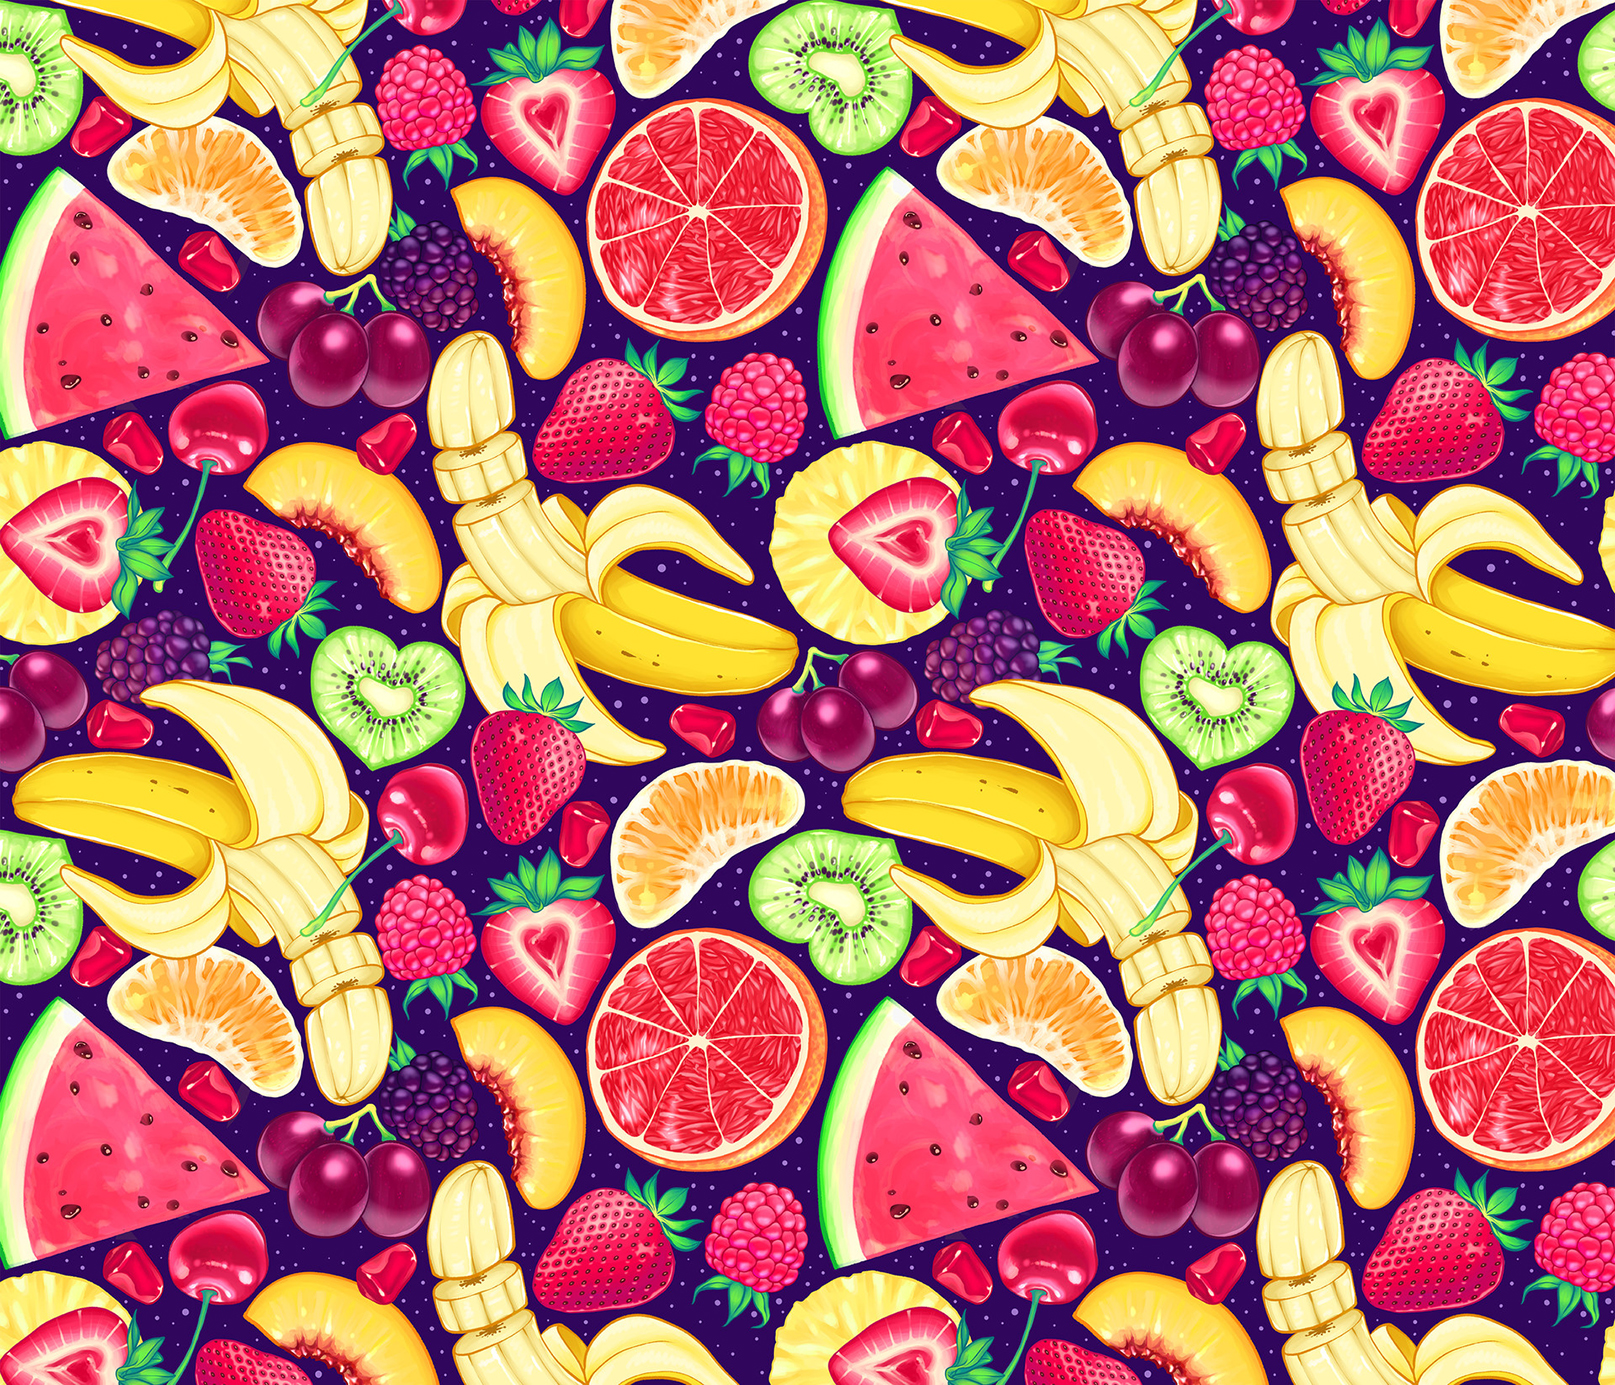 Handy-Wallpaper Kirsche, Erdbeere, Kunst, Trauben, Kiwi, Himbeere, Blackberry, Hell, Muster, Wassermelone, Banane, Appetitlich, Mango kostenlos herunterladen.